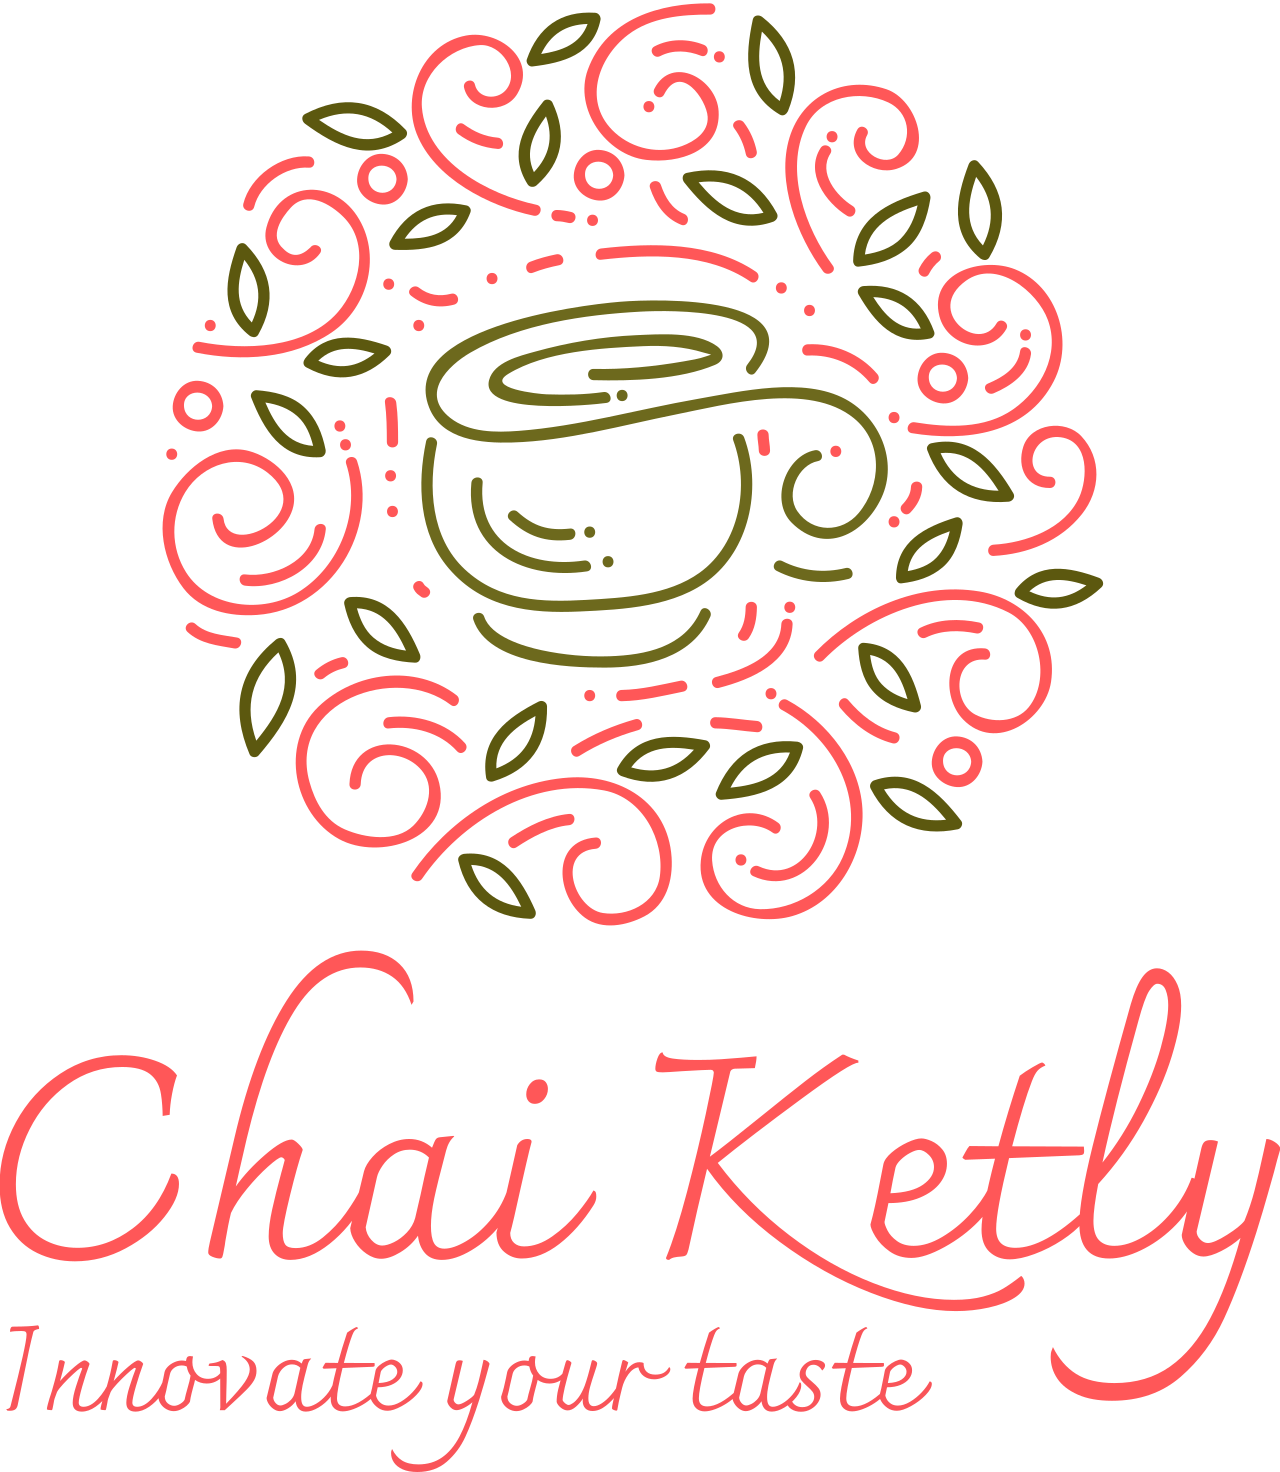 Chai Ketly's web page